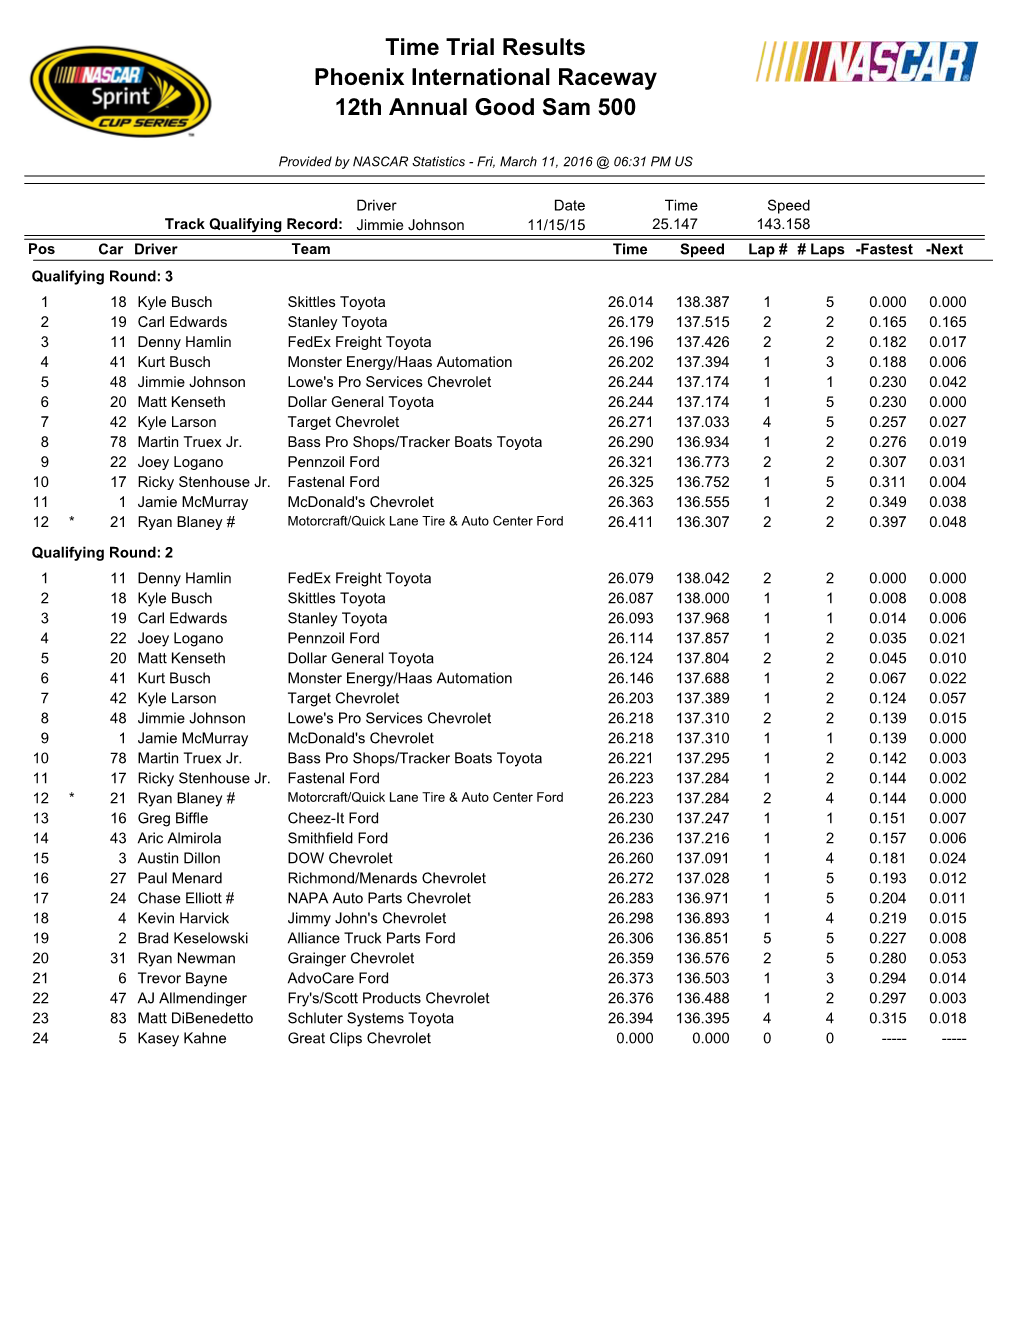 Time Trial Results Phoenix International Raceway 12Th Annual Good Sam 500